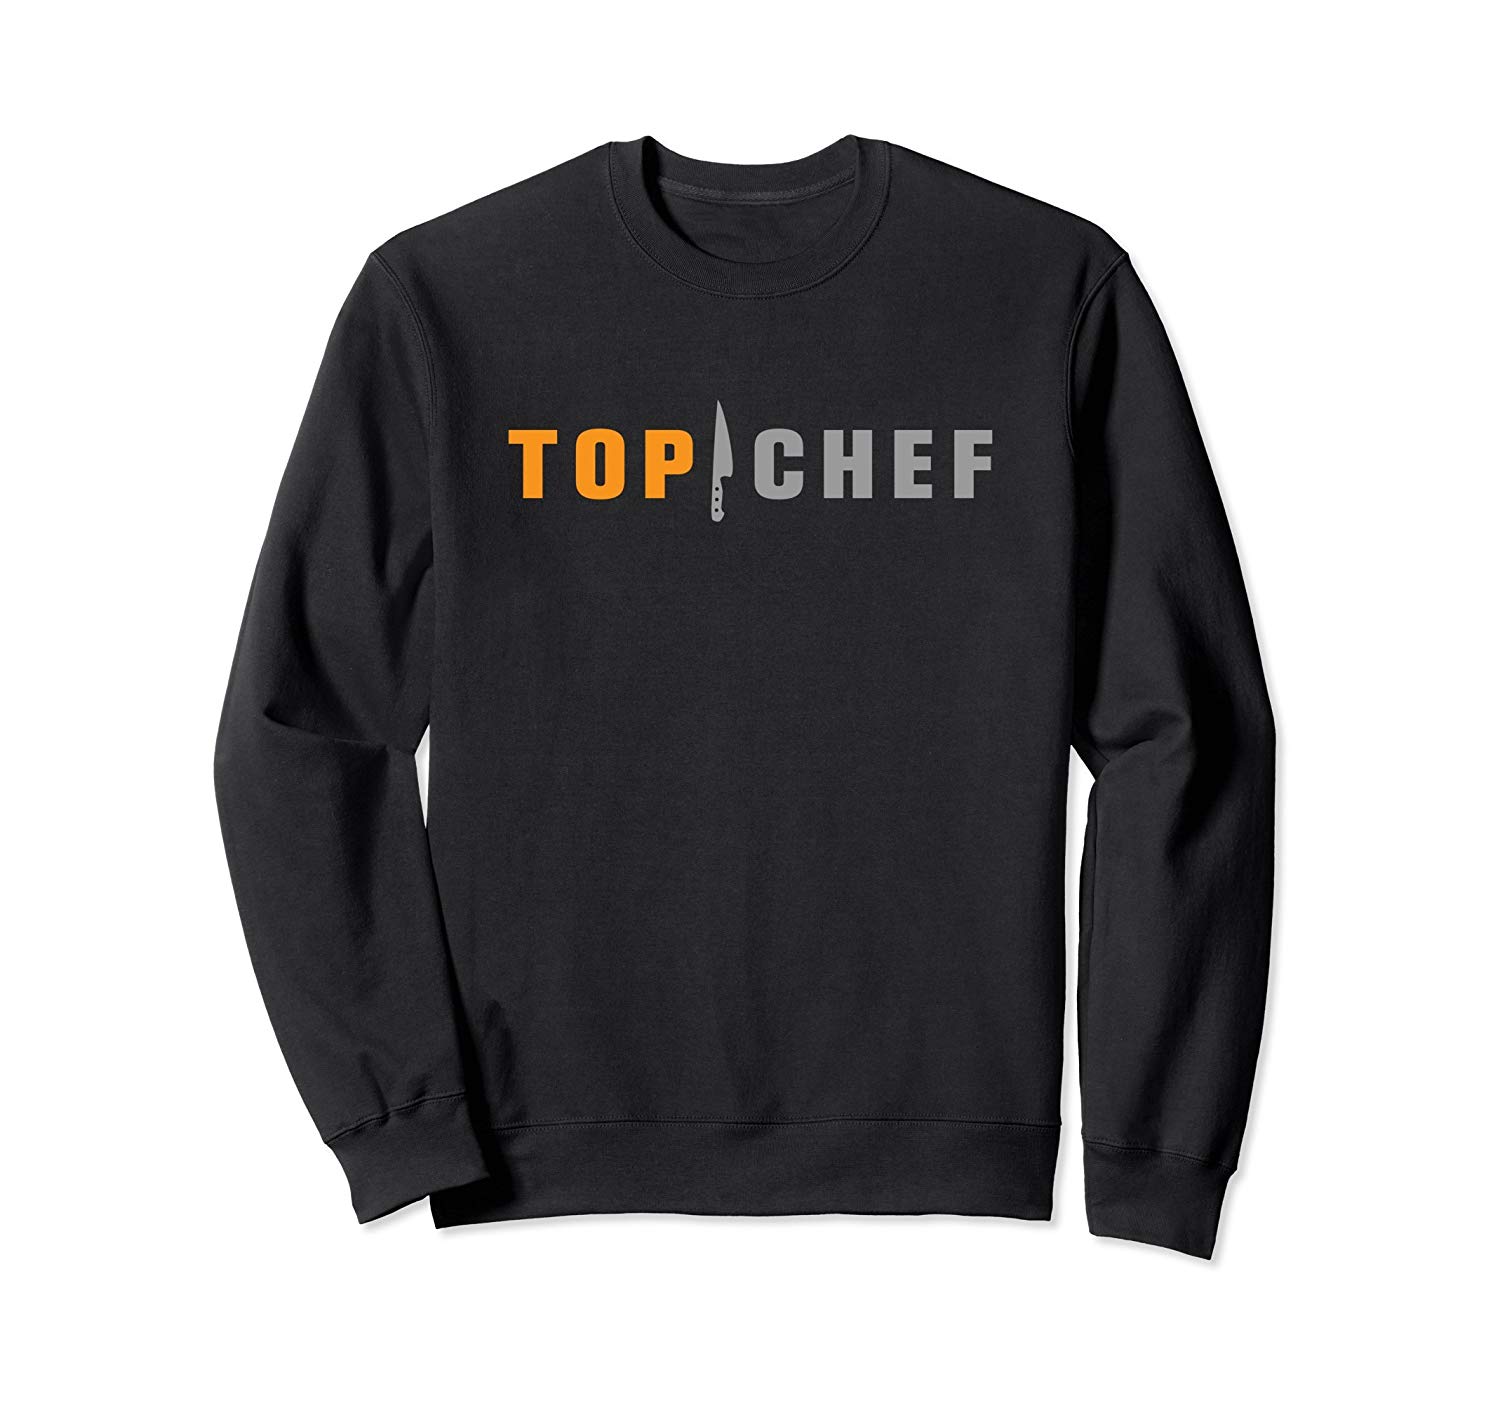 Amazon.com: Top Chef Logo Crew Neck Sweatshirt: Clothing.